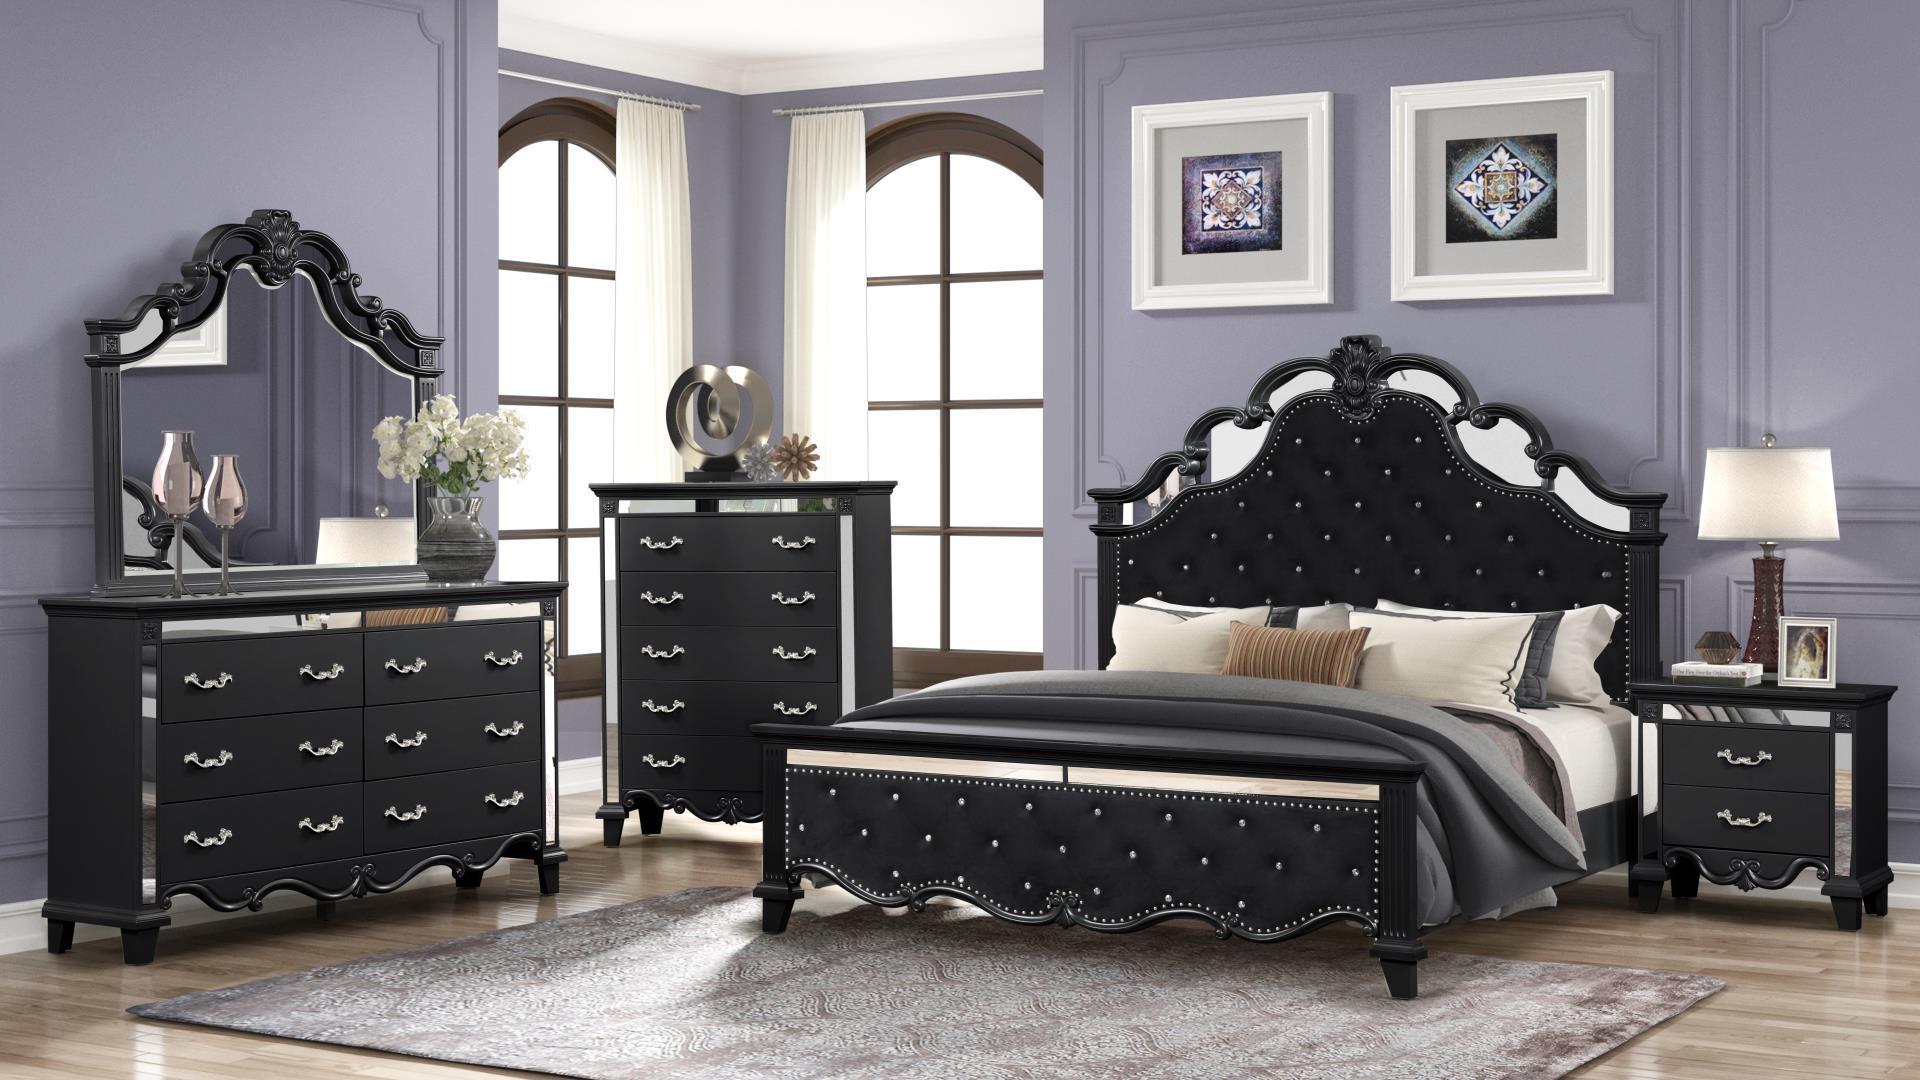 

    
Glam Black Tufted King Bedroom Set 4Pcs MILAN Galaxy Home Contemporary Modern
